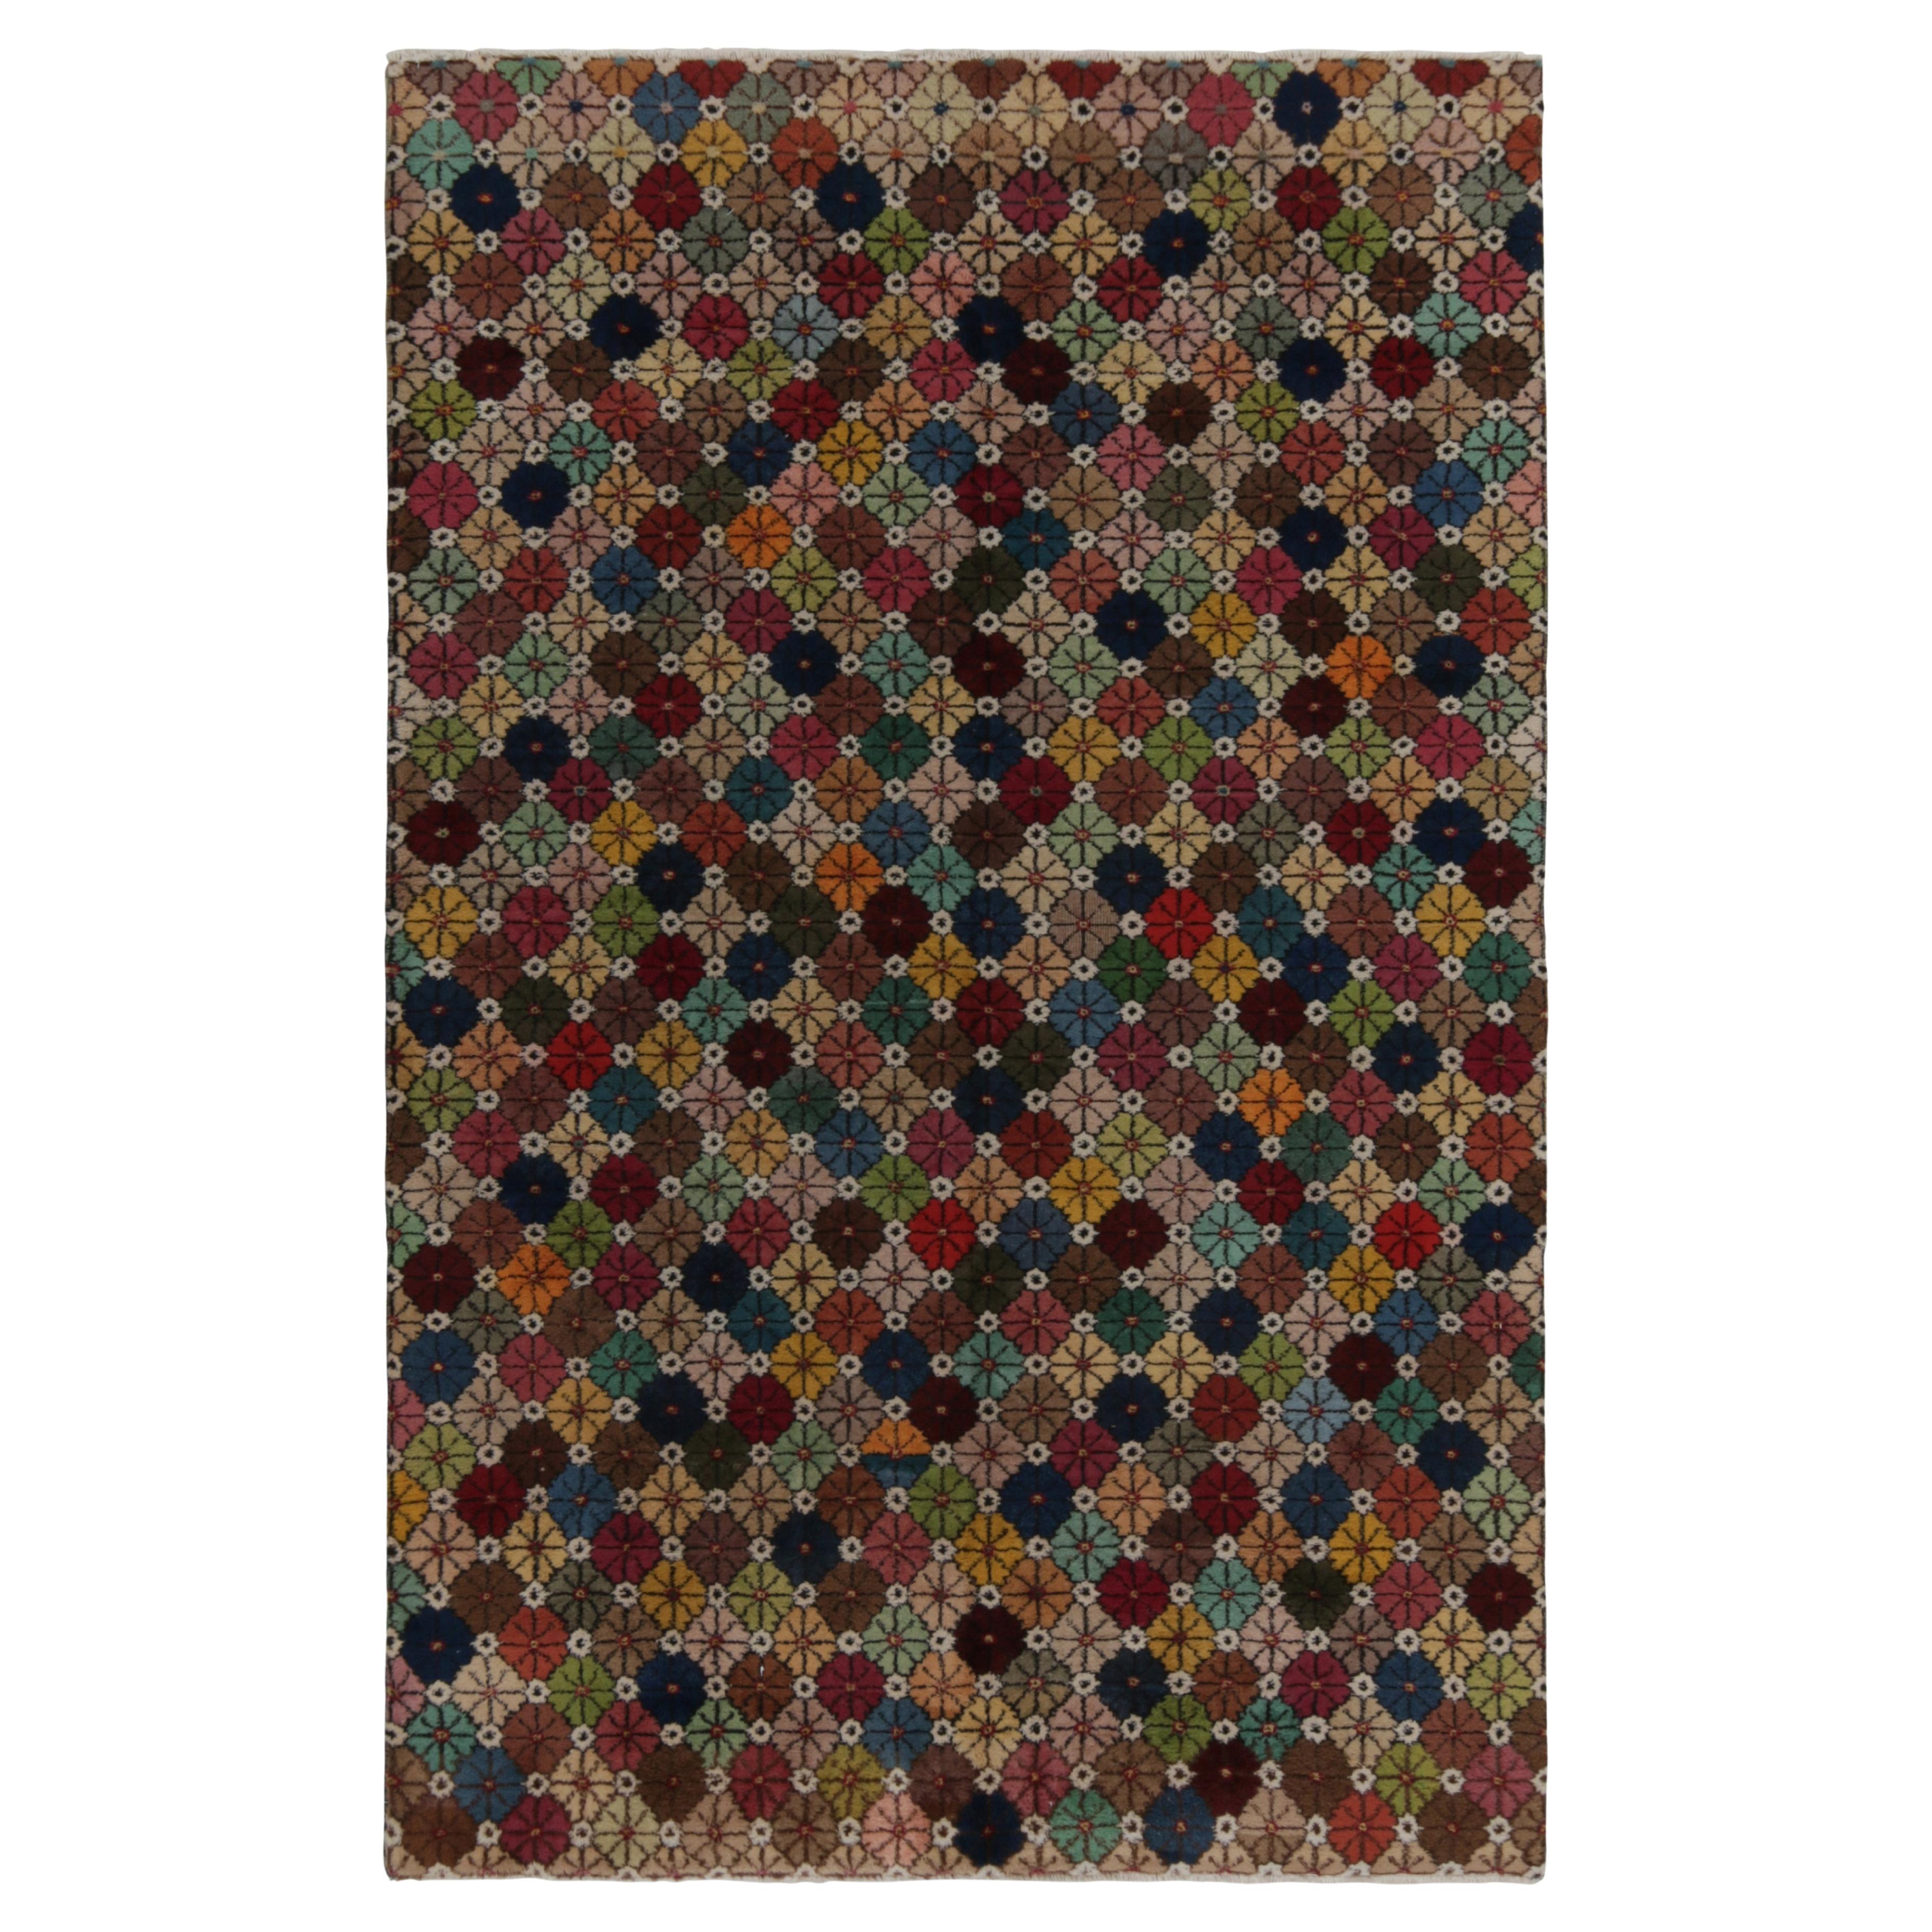 1960s Vintage Distressed Rug in Multicolor Geometric Patterns by Rug & Kilim